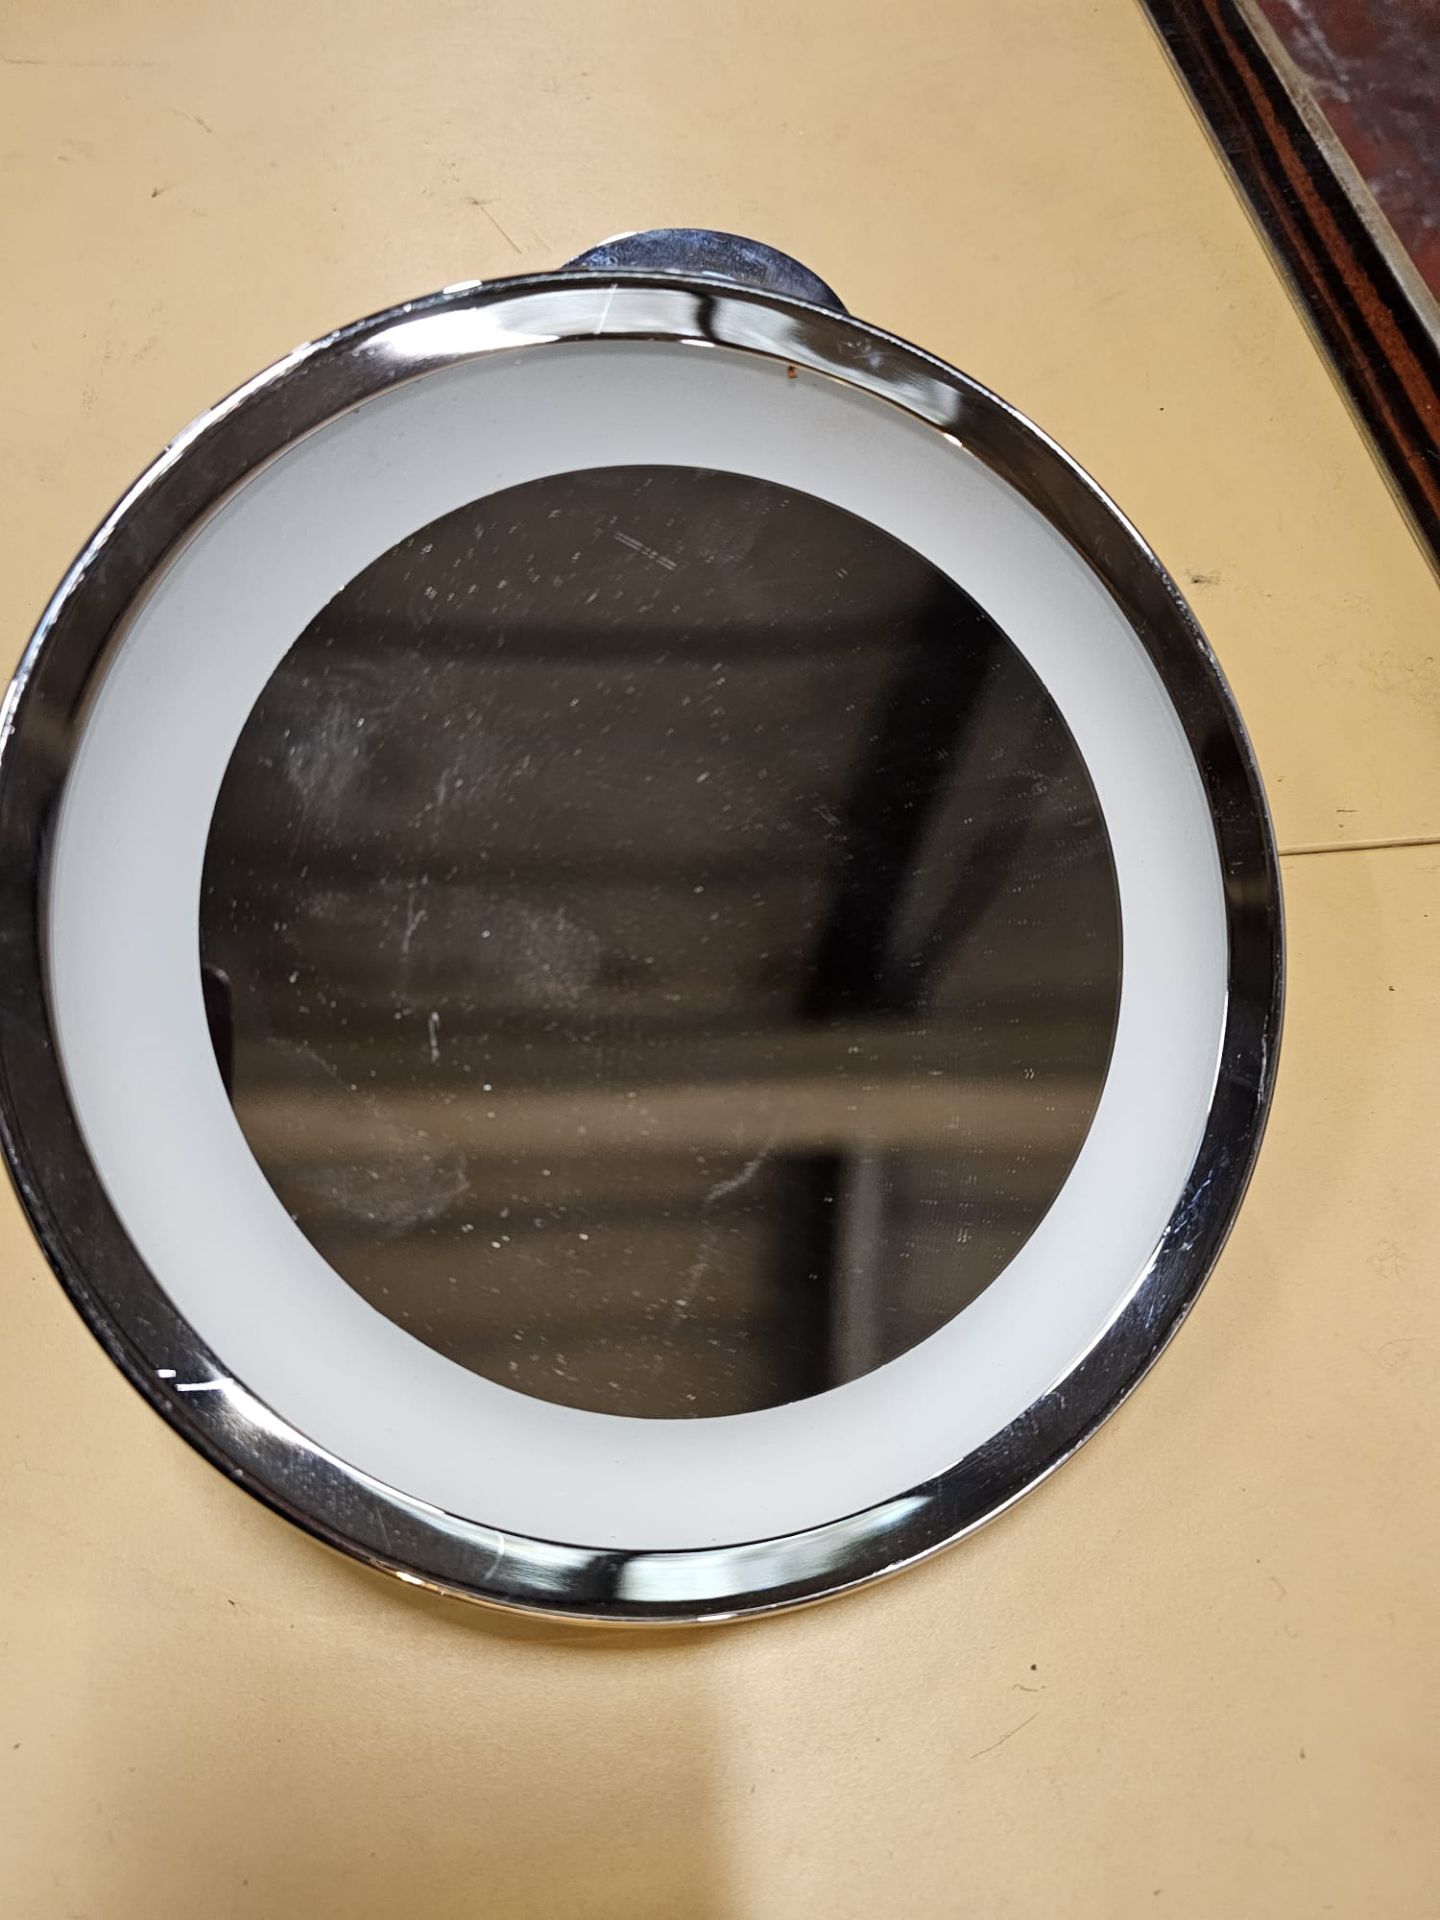 LED Illuminated Magnifying Vanity Mirror For Bathroom Round Ingress Protection Rating IP47 - Image 3 of 3